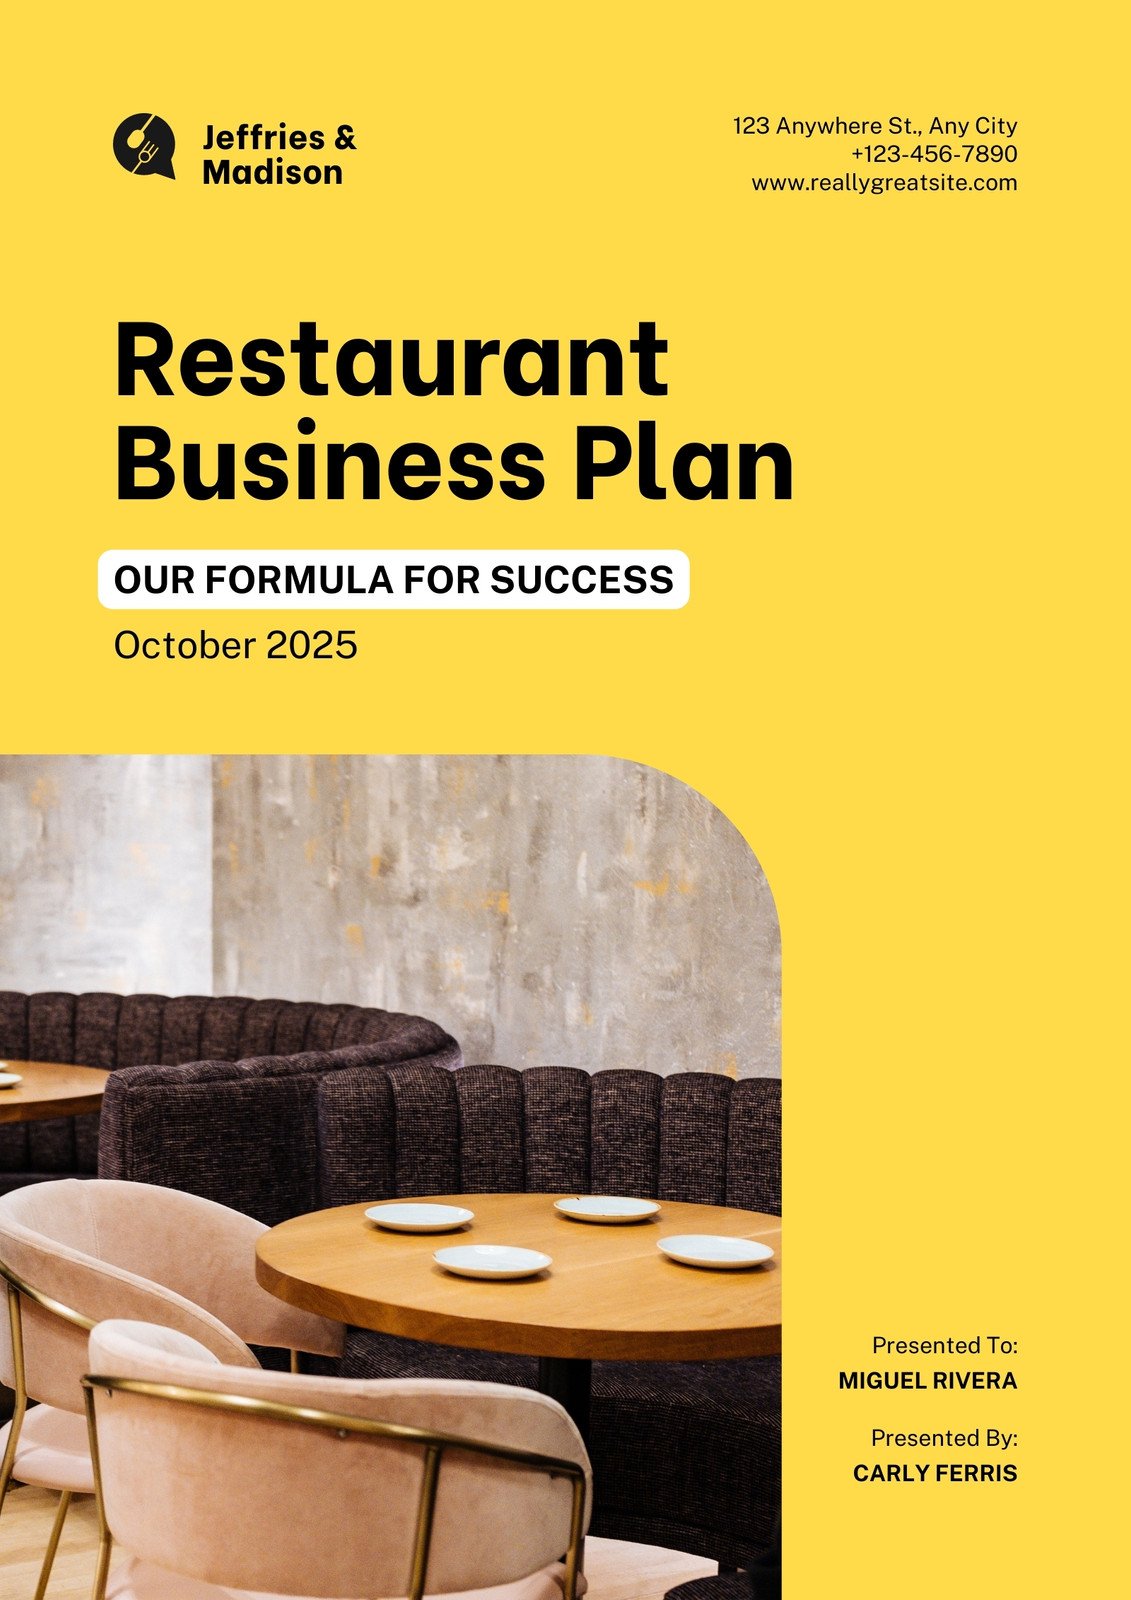 restaurant business plan pdf free download india